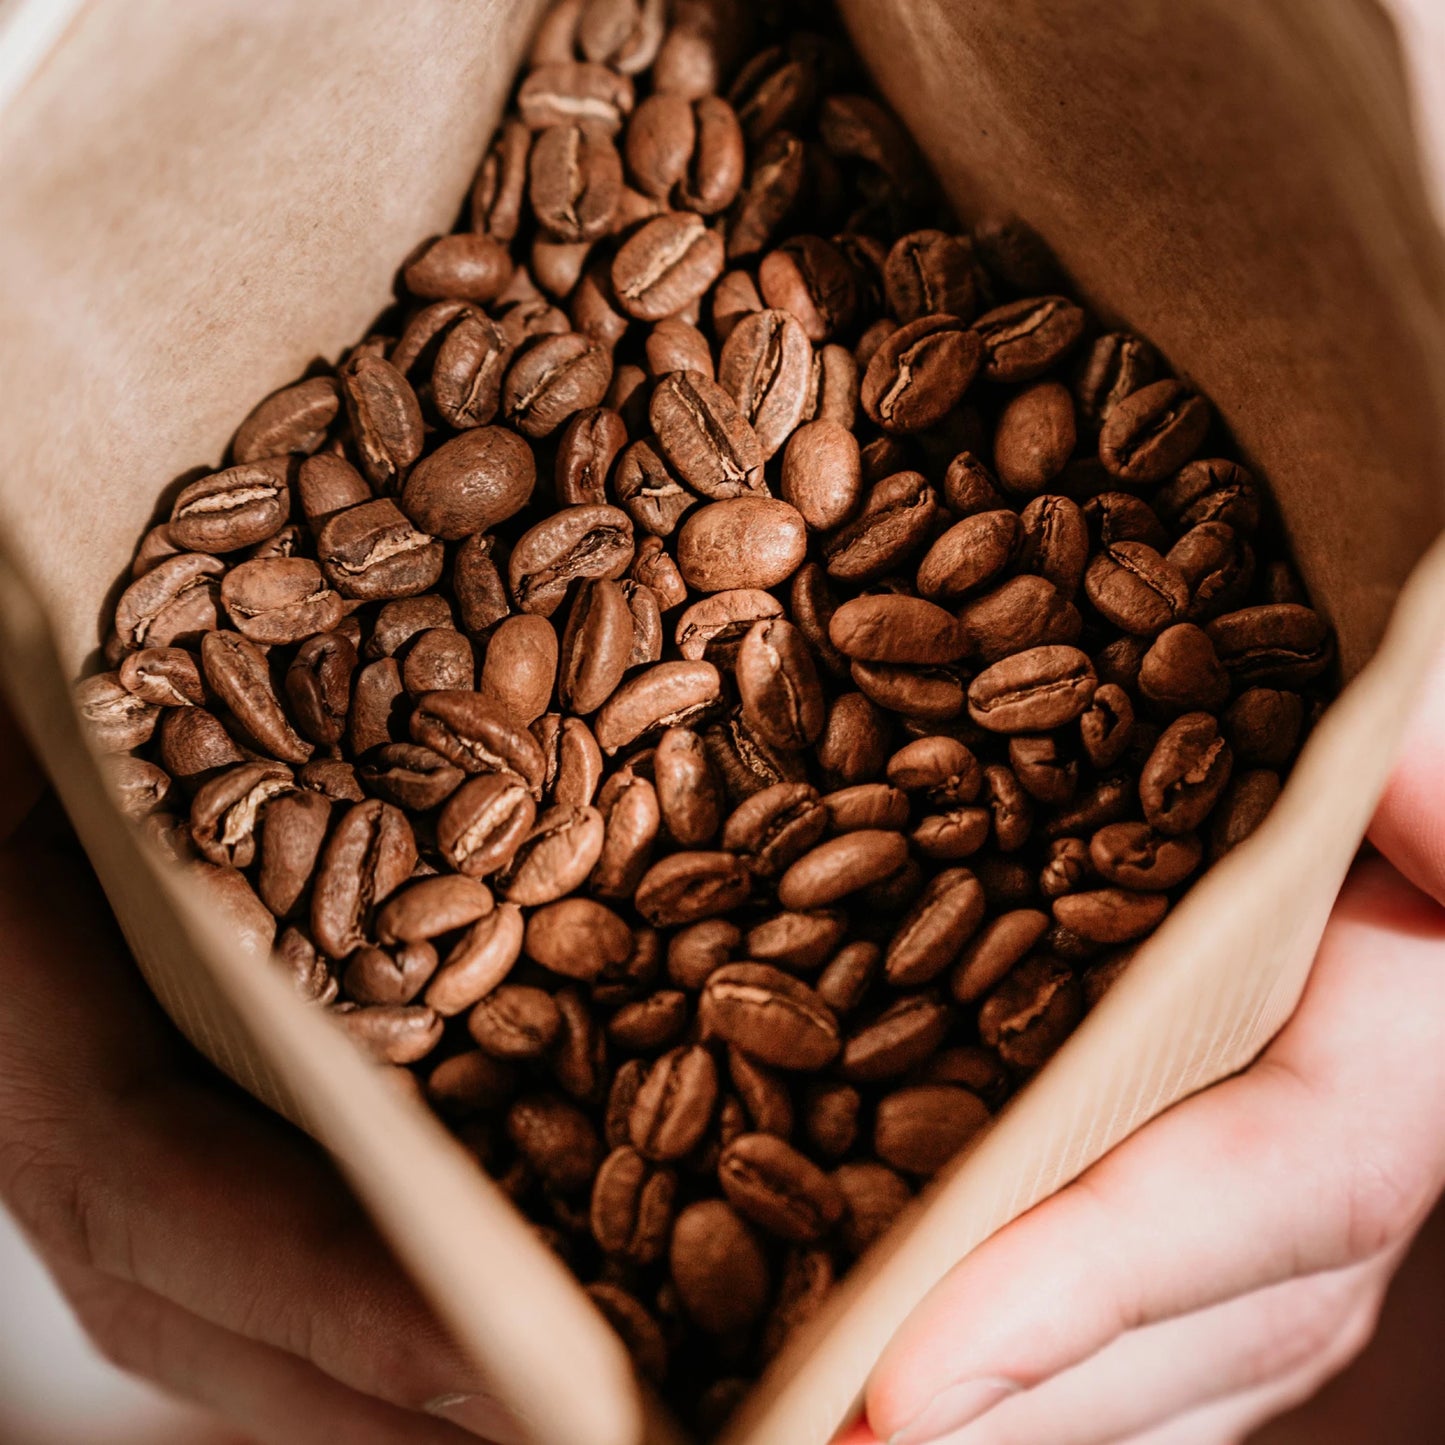 Kavos pupelės Colombia (Fairtrade & Organic), 333 g